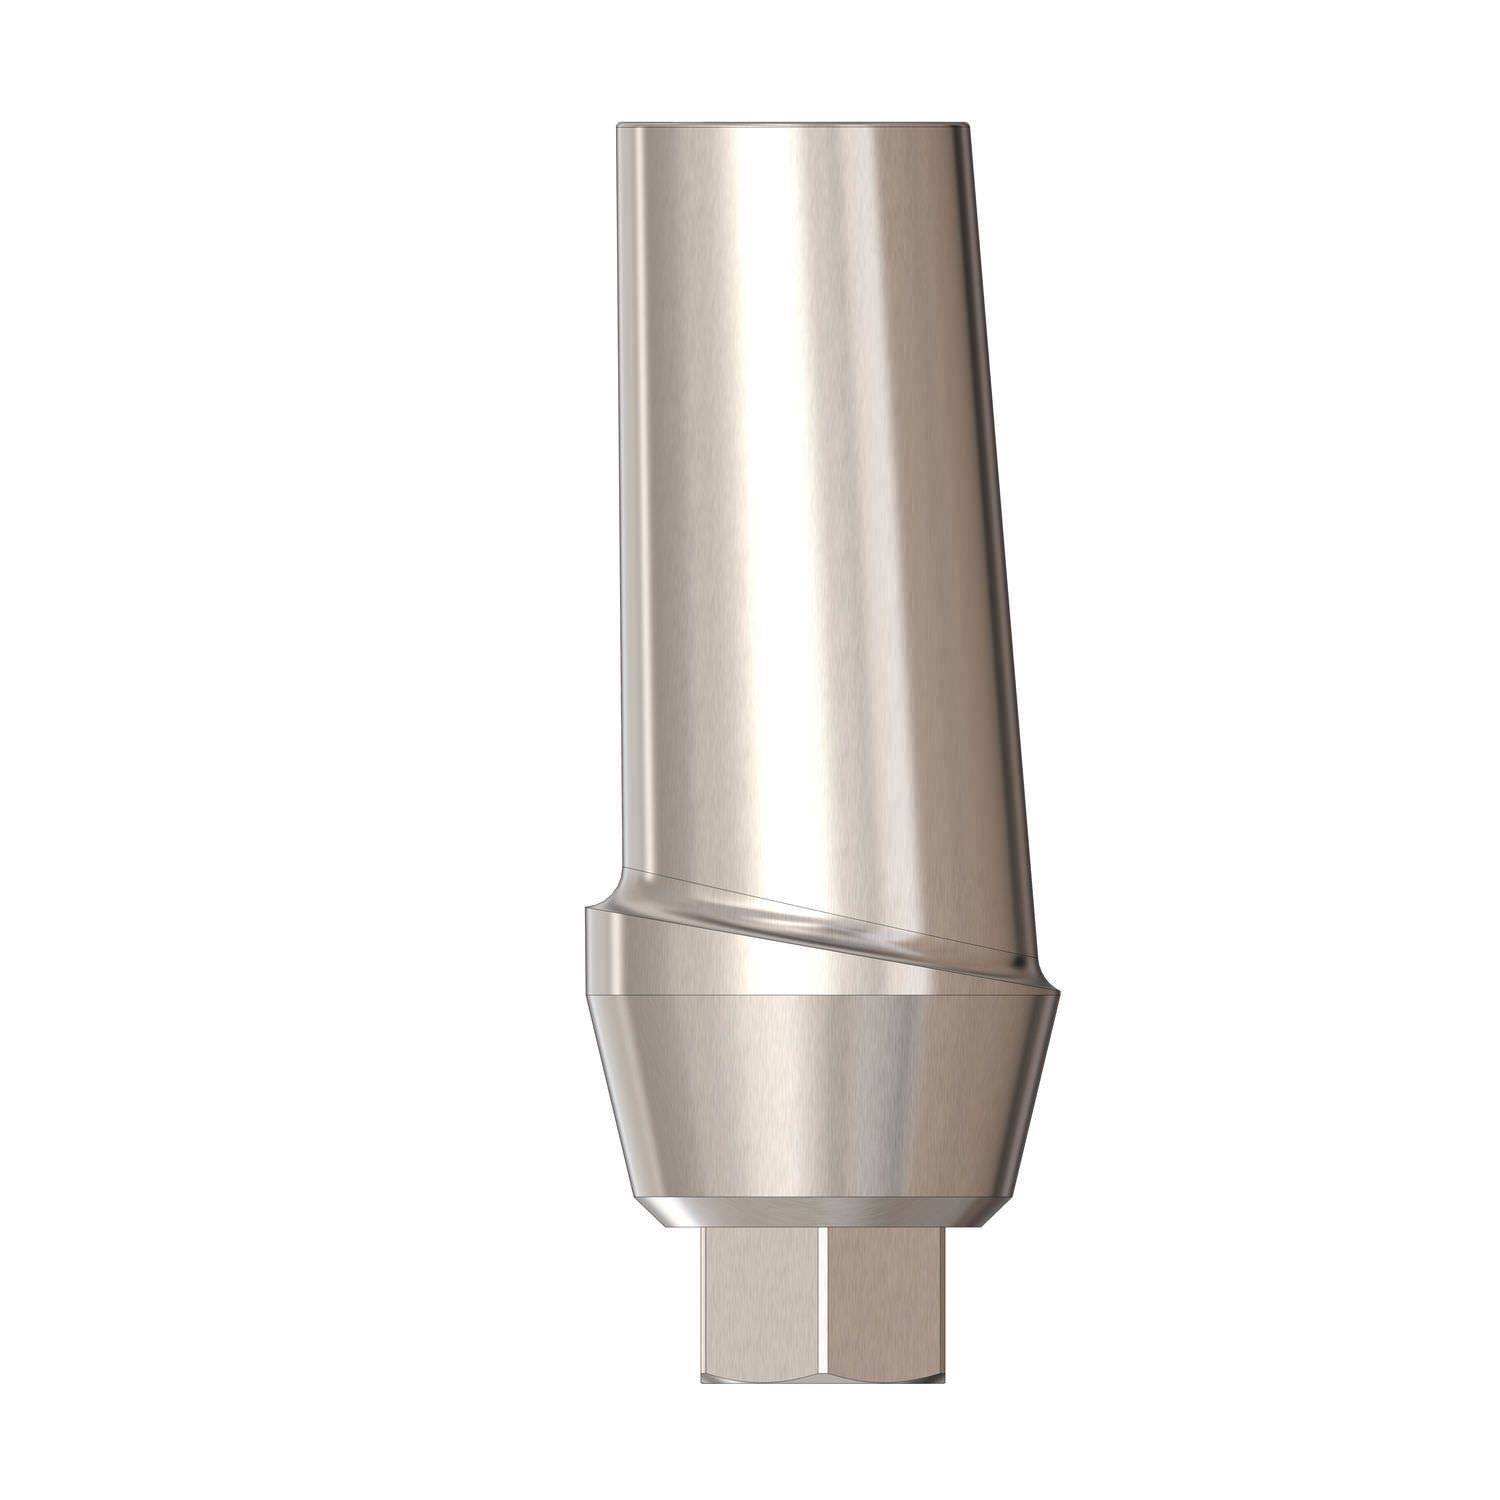 Anatomical implant abutment / straight / titanium ø 4.7 mm | CO-900x series Cortex-Dental Implants Industries Ltd.